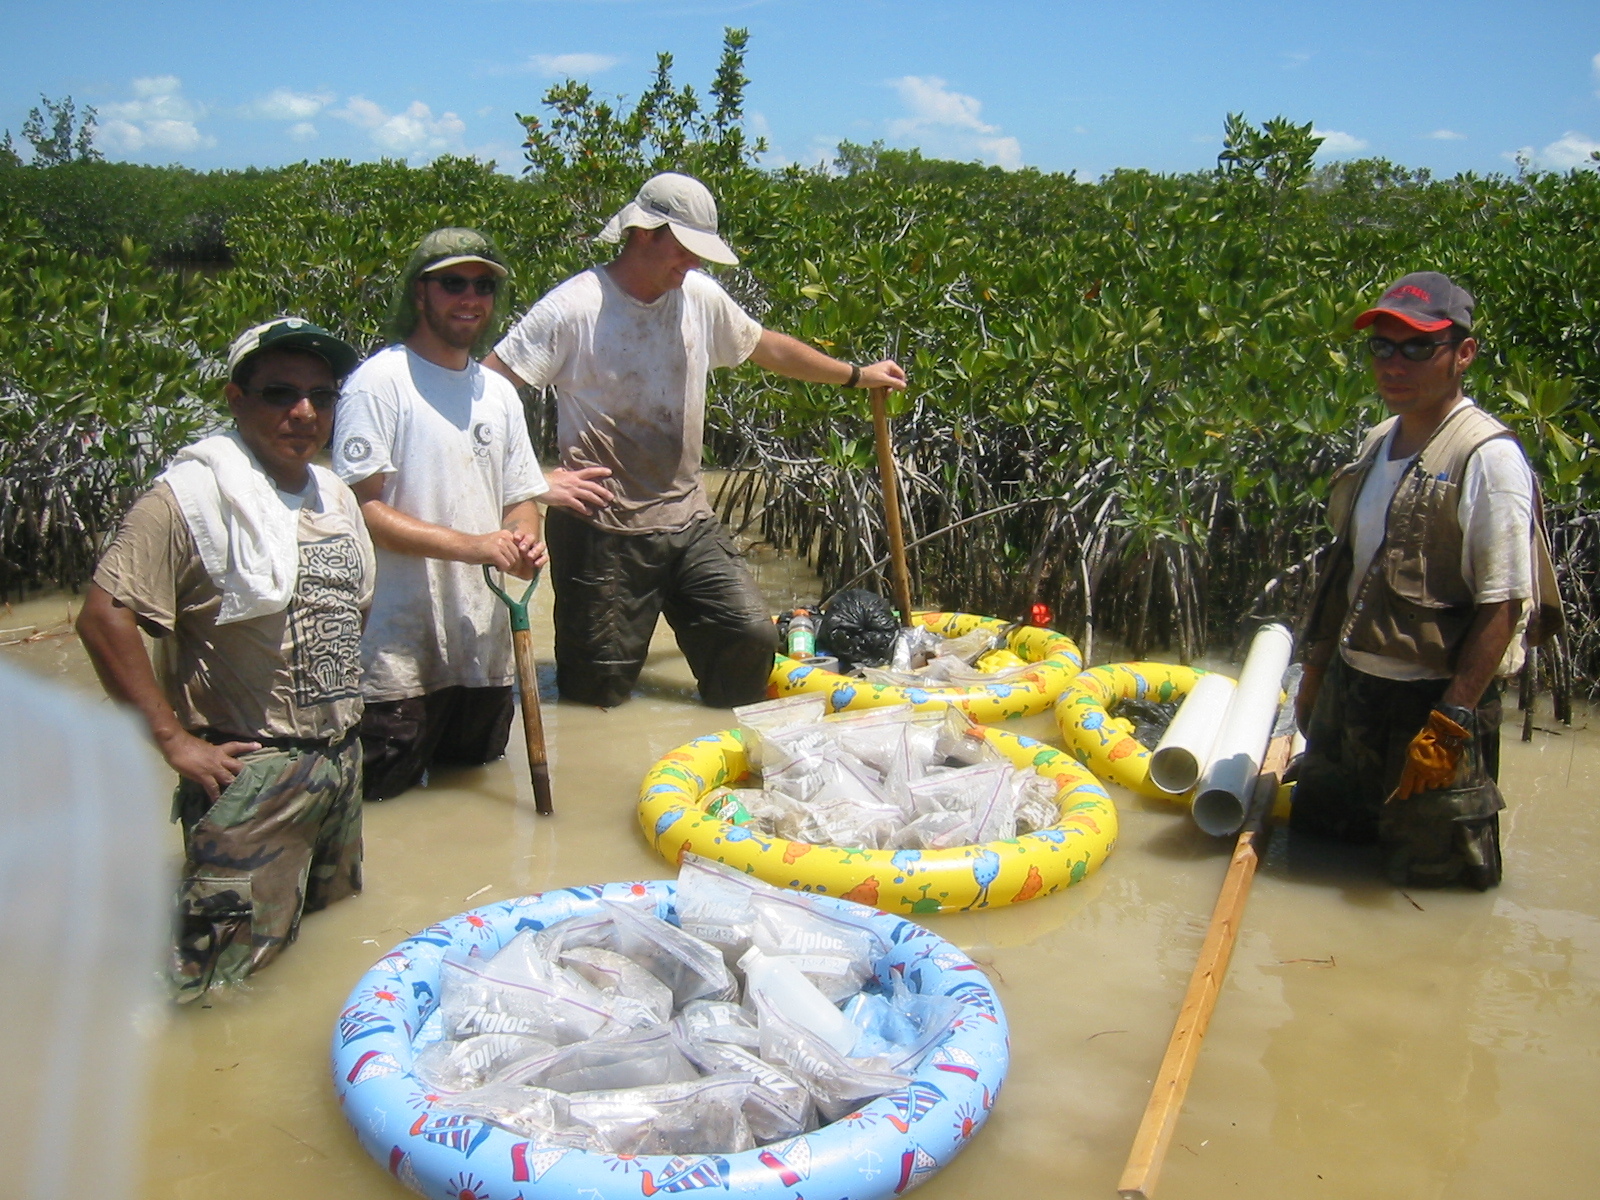 Left to right: Carlos Coronado-Molina, Justin, Dan Bond, and Edward Castaneda retrieving root biomass cores in dwarf mangroves in Taylor Slough